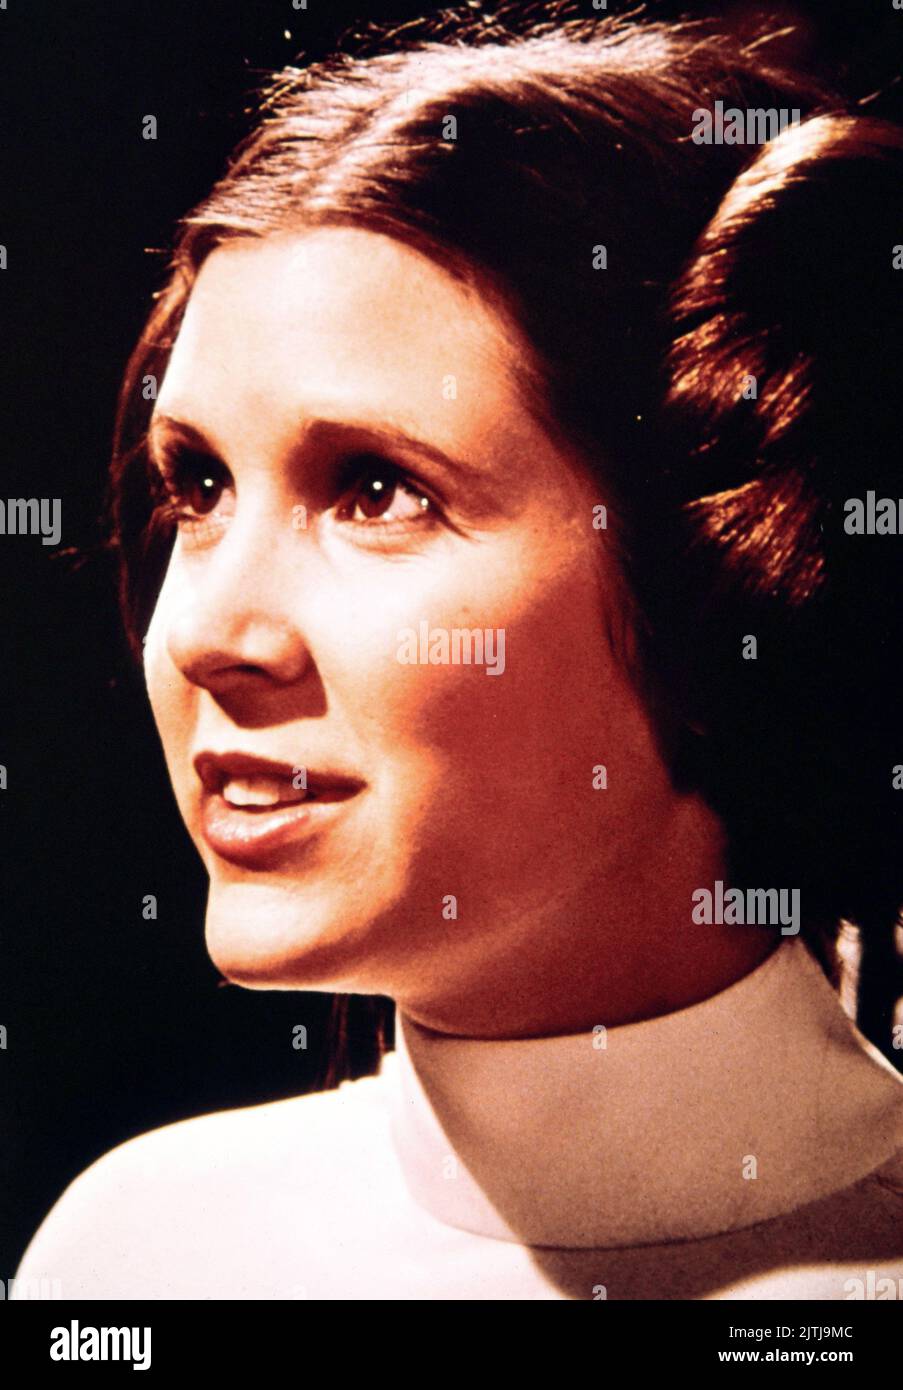 Star Wars, aka Krieg der Sterne, USA 1977, Regie: George Lucas, Darsteller: Carrie Fisher Foto Stock